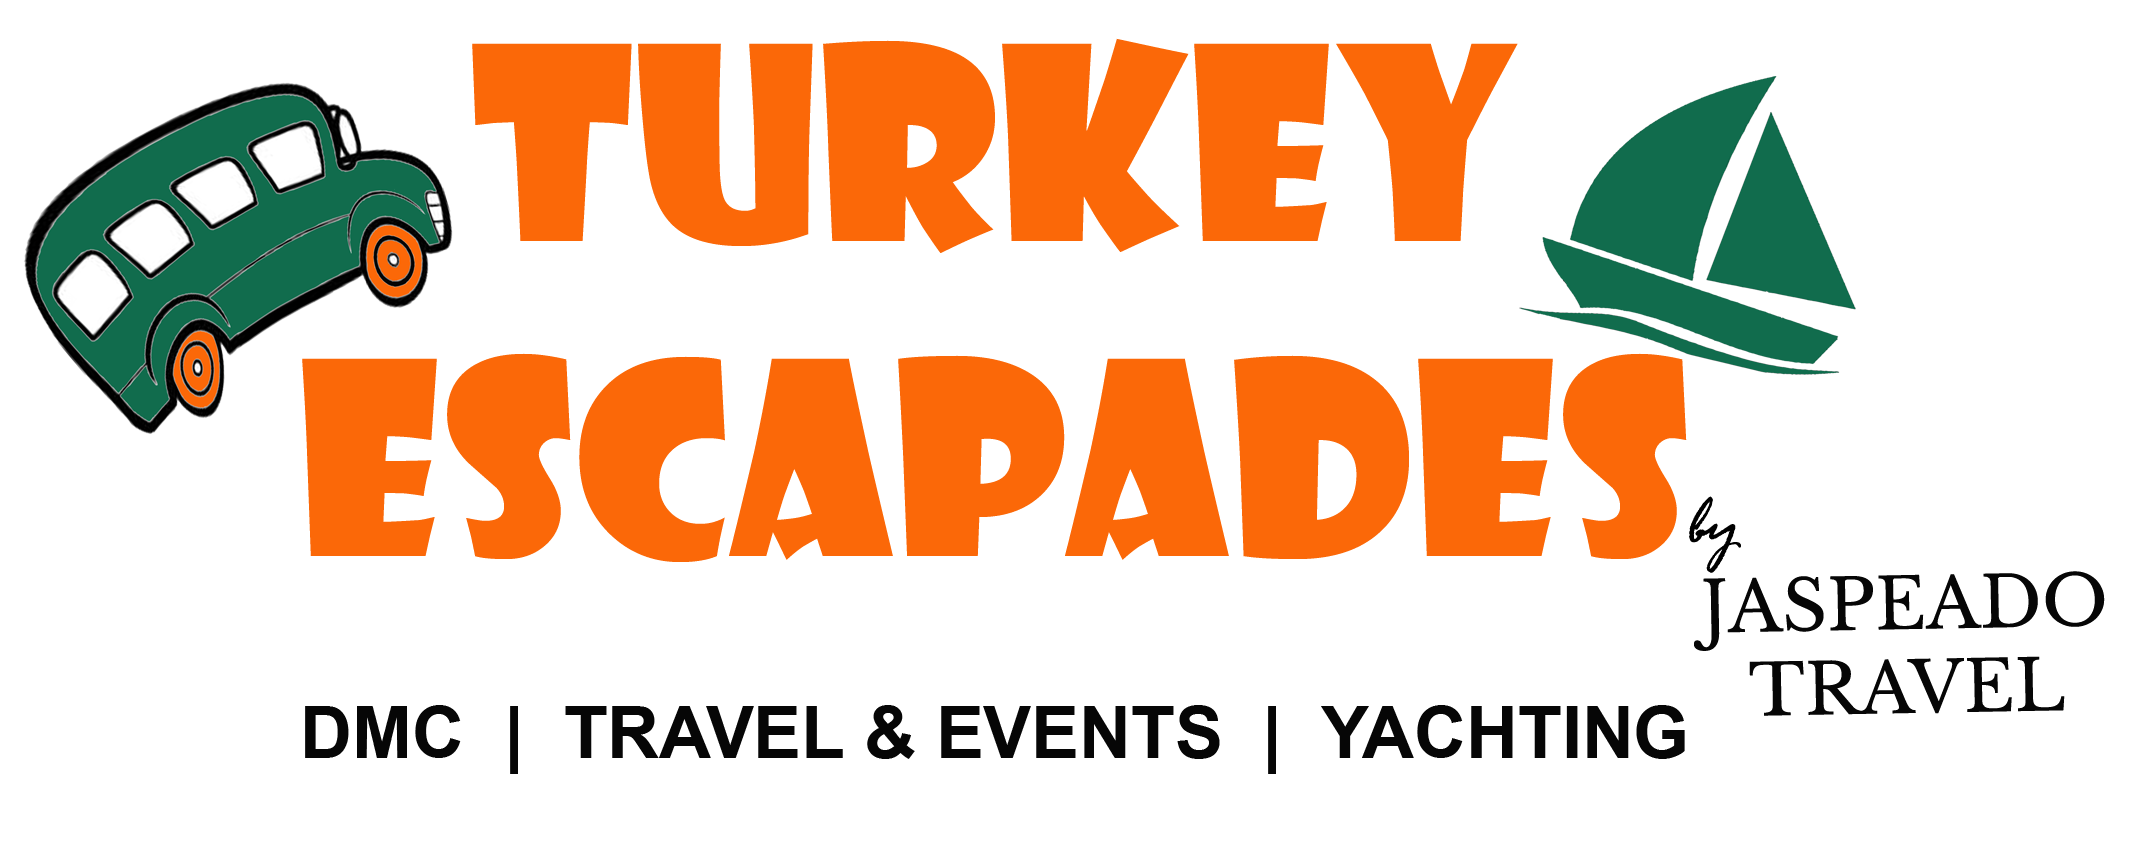 Turkey Escapades | Turkey Super Saver Tour - Turkey Escapades 9 Days